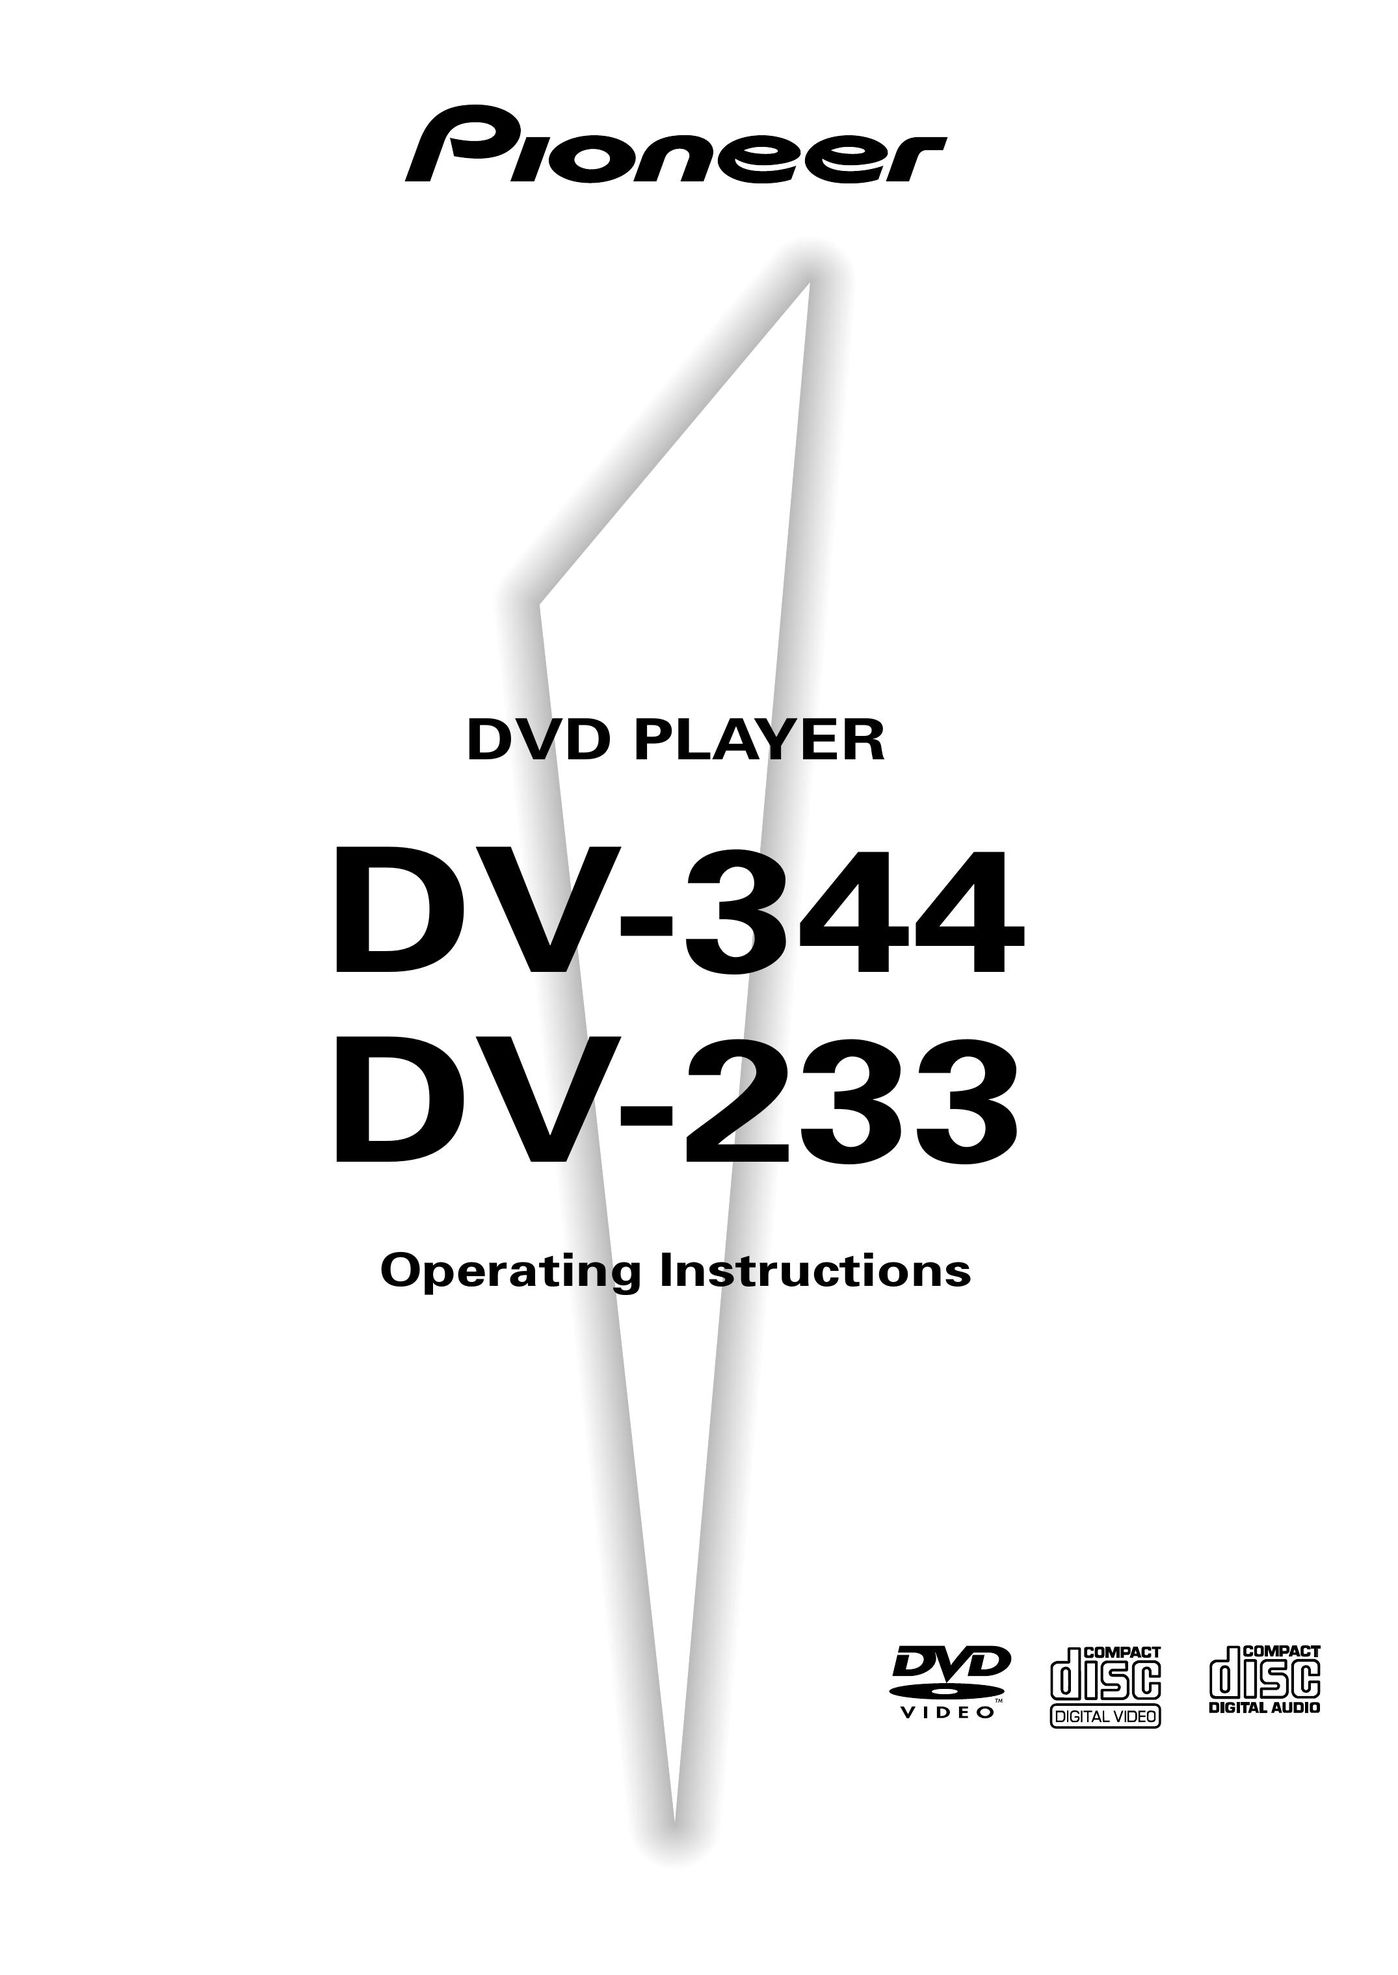 Pioneer DV-233 DVD Player User Manual